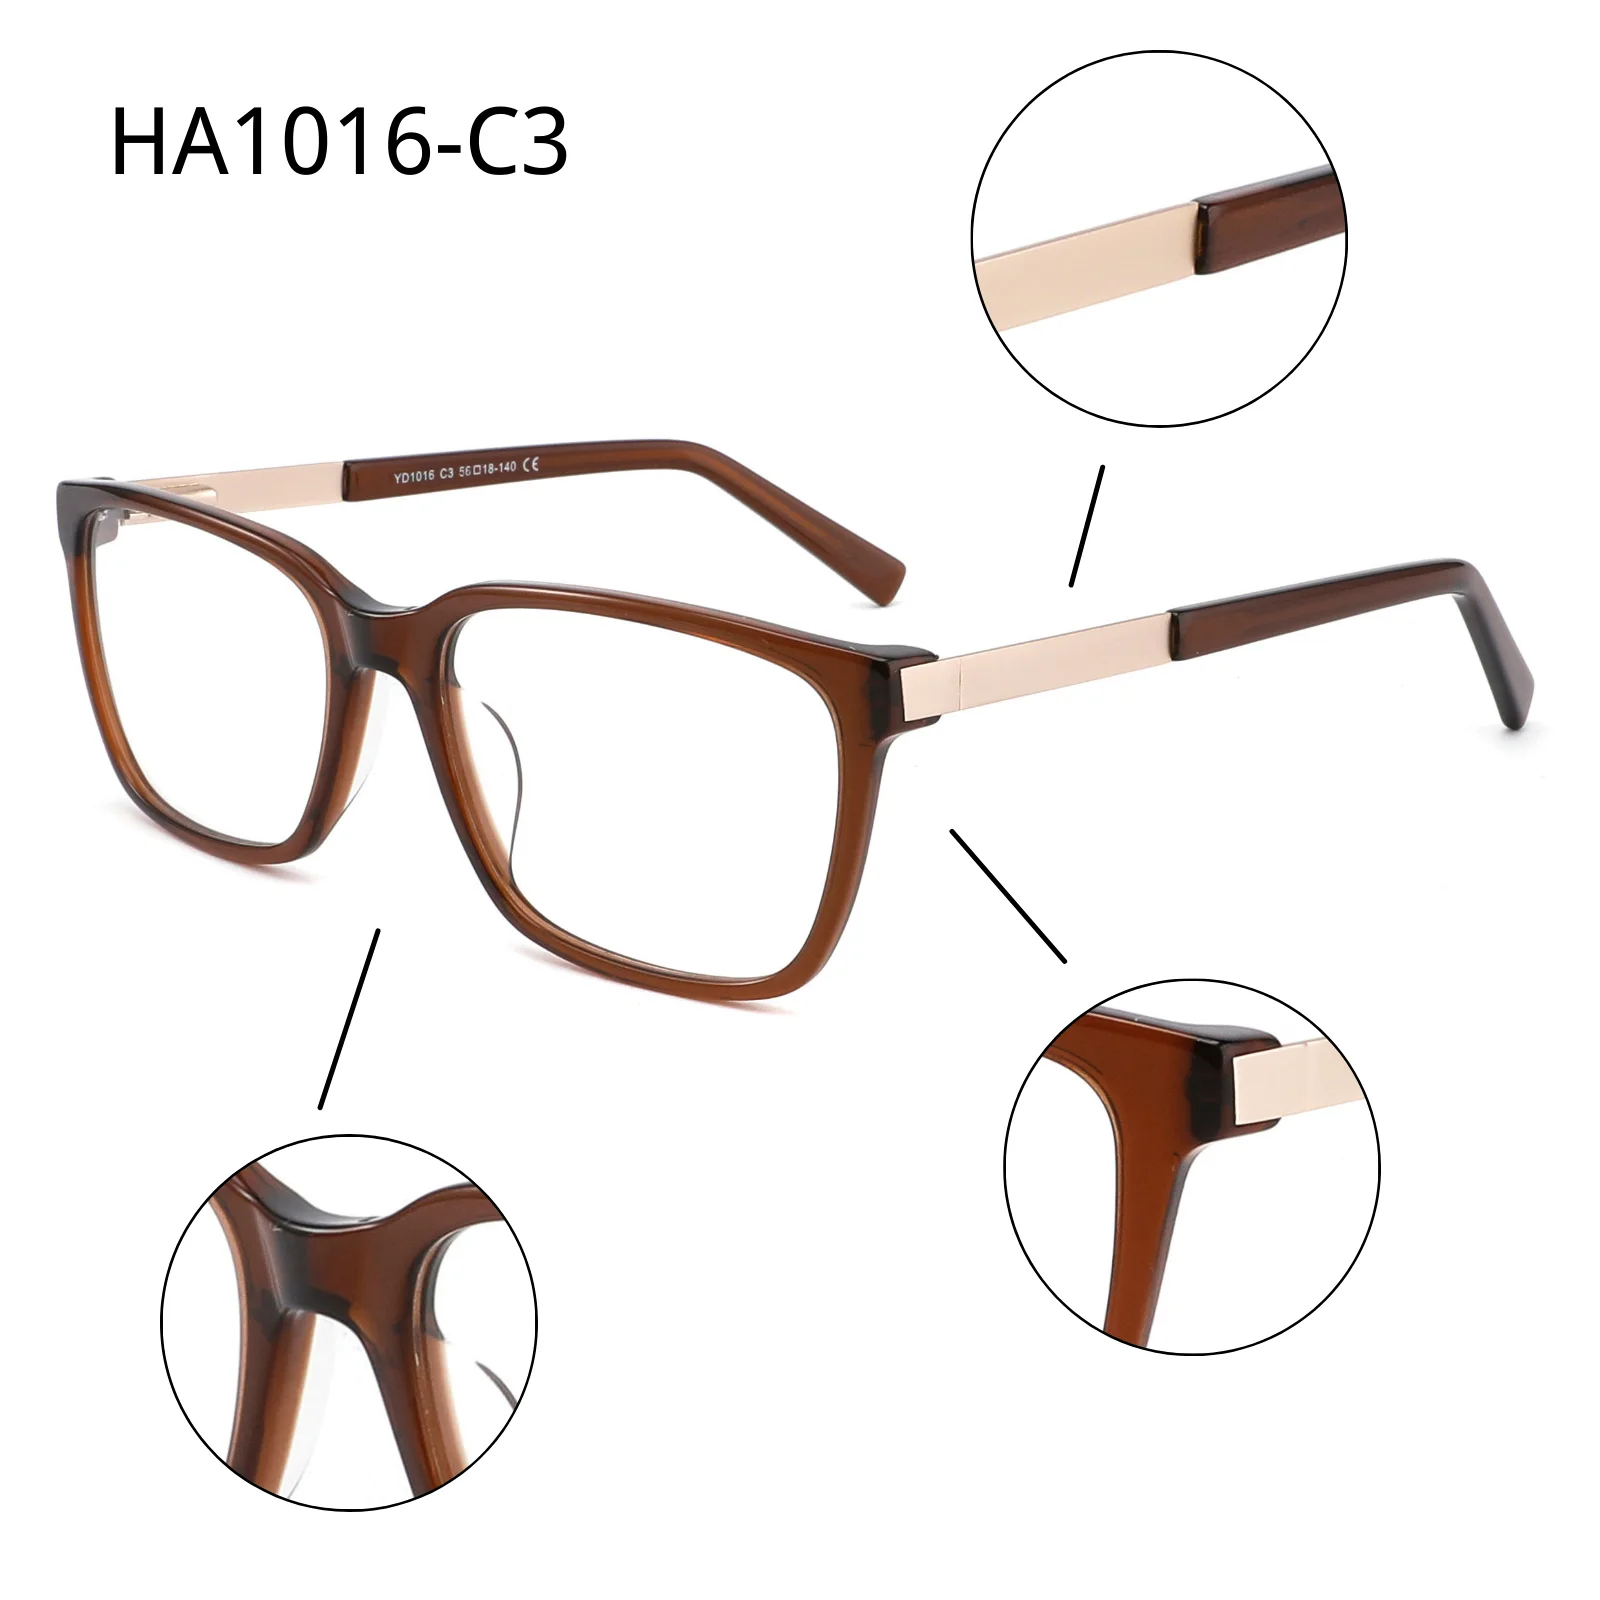 

VIFF HA1017 Eyeglasses Fashion Opticals Woman Glasses High Quality Preminum Optical Frame Mazzucchelli Acetate Sunglasses